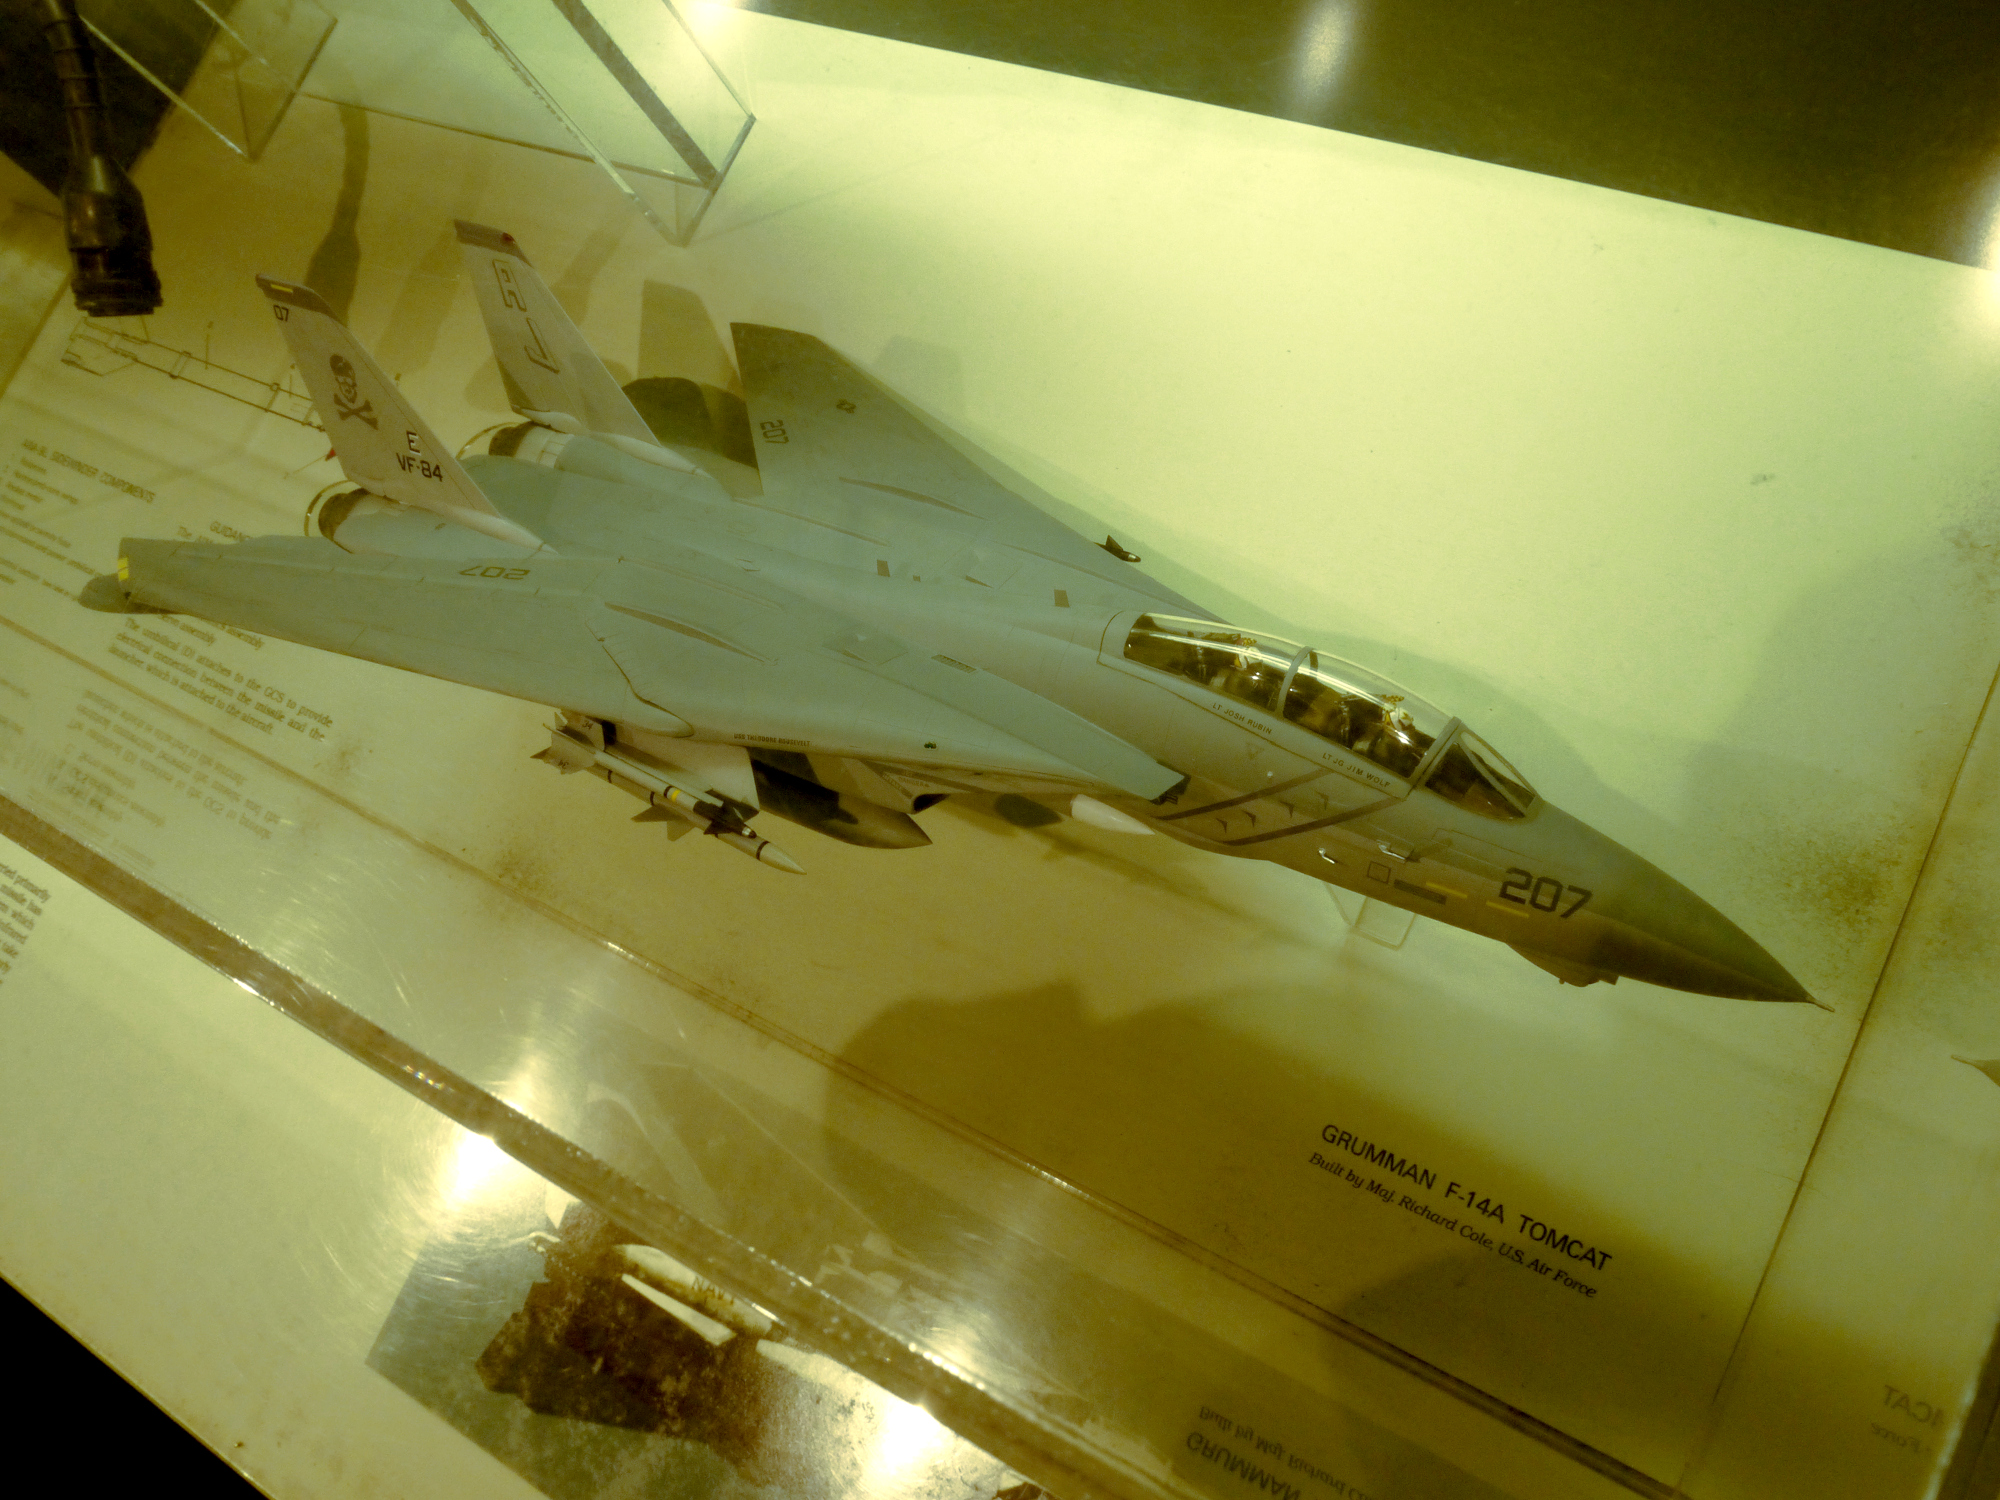 Large F-14 model